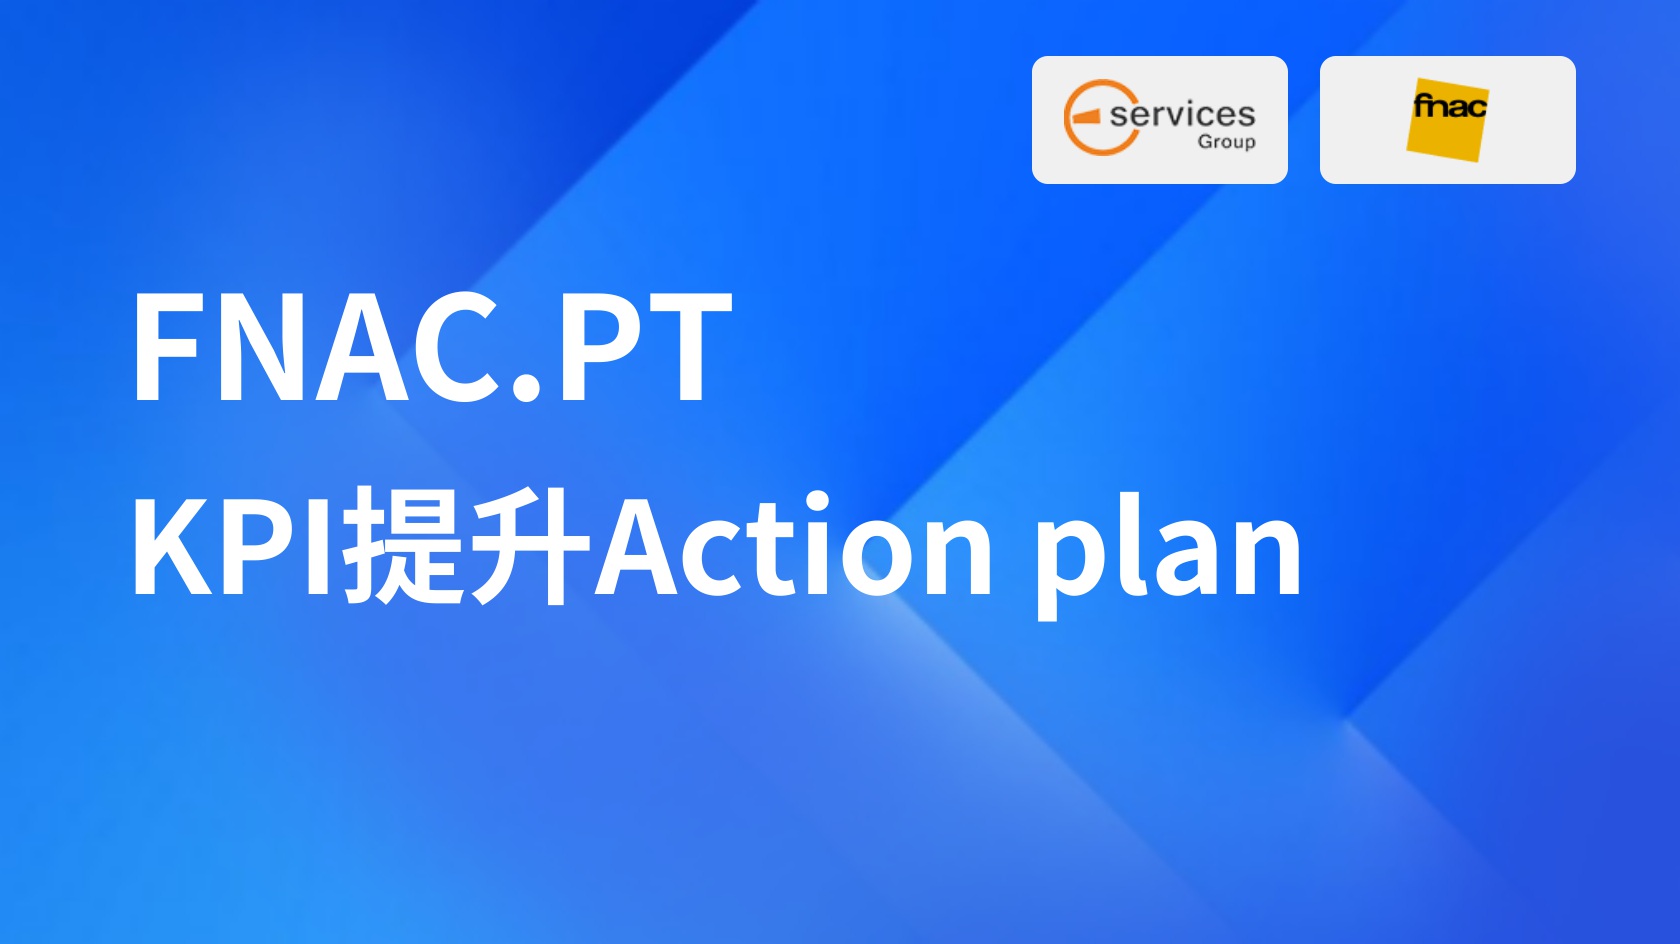 KPI提升Action plan